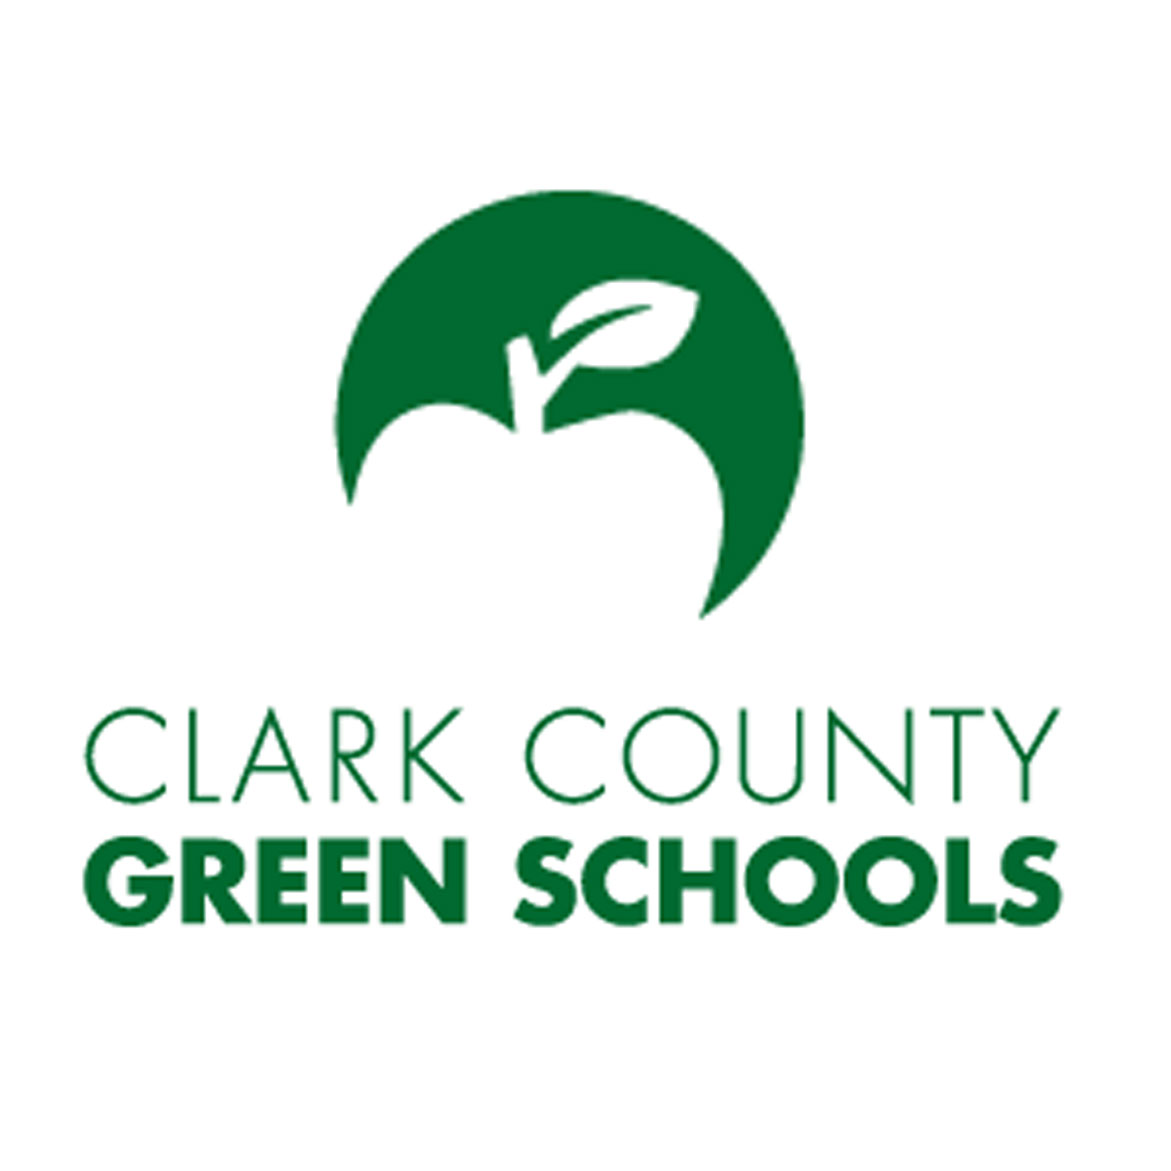 Clark county green schools logo